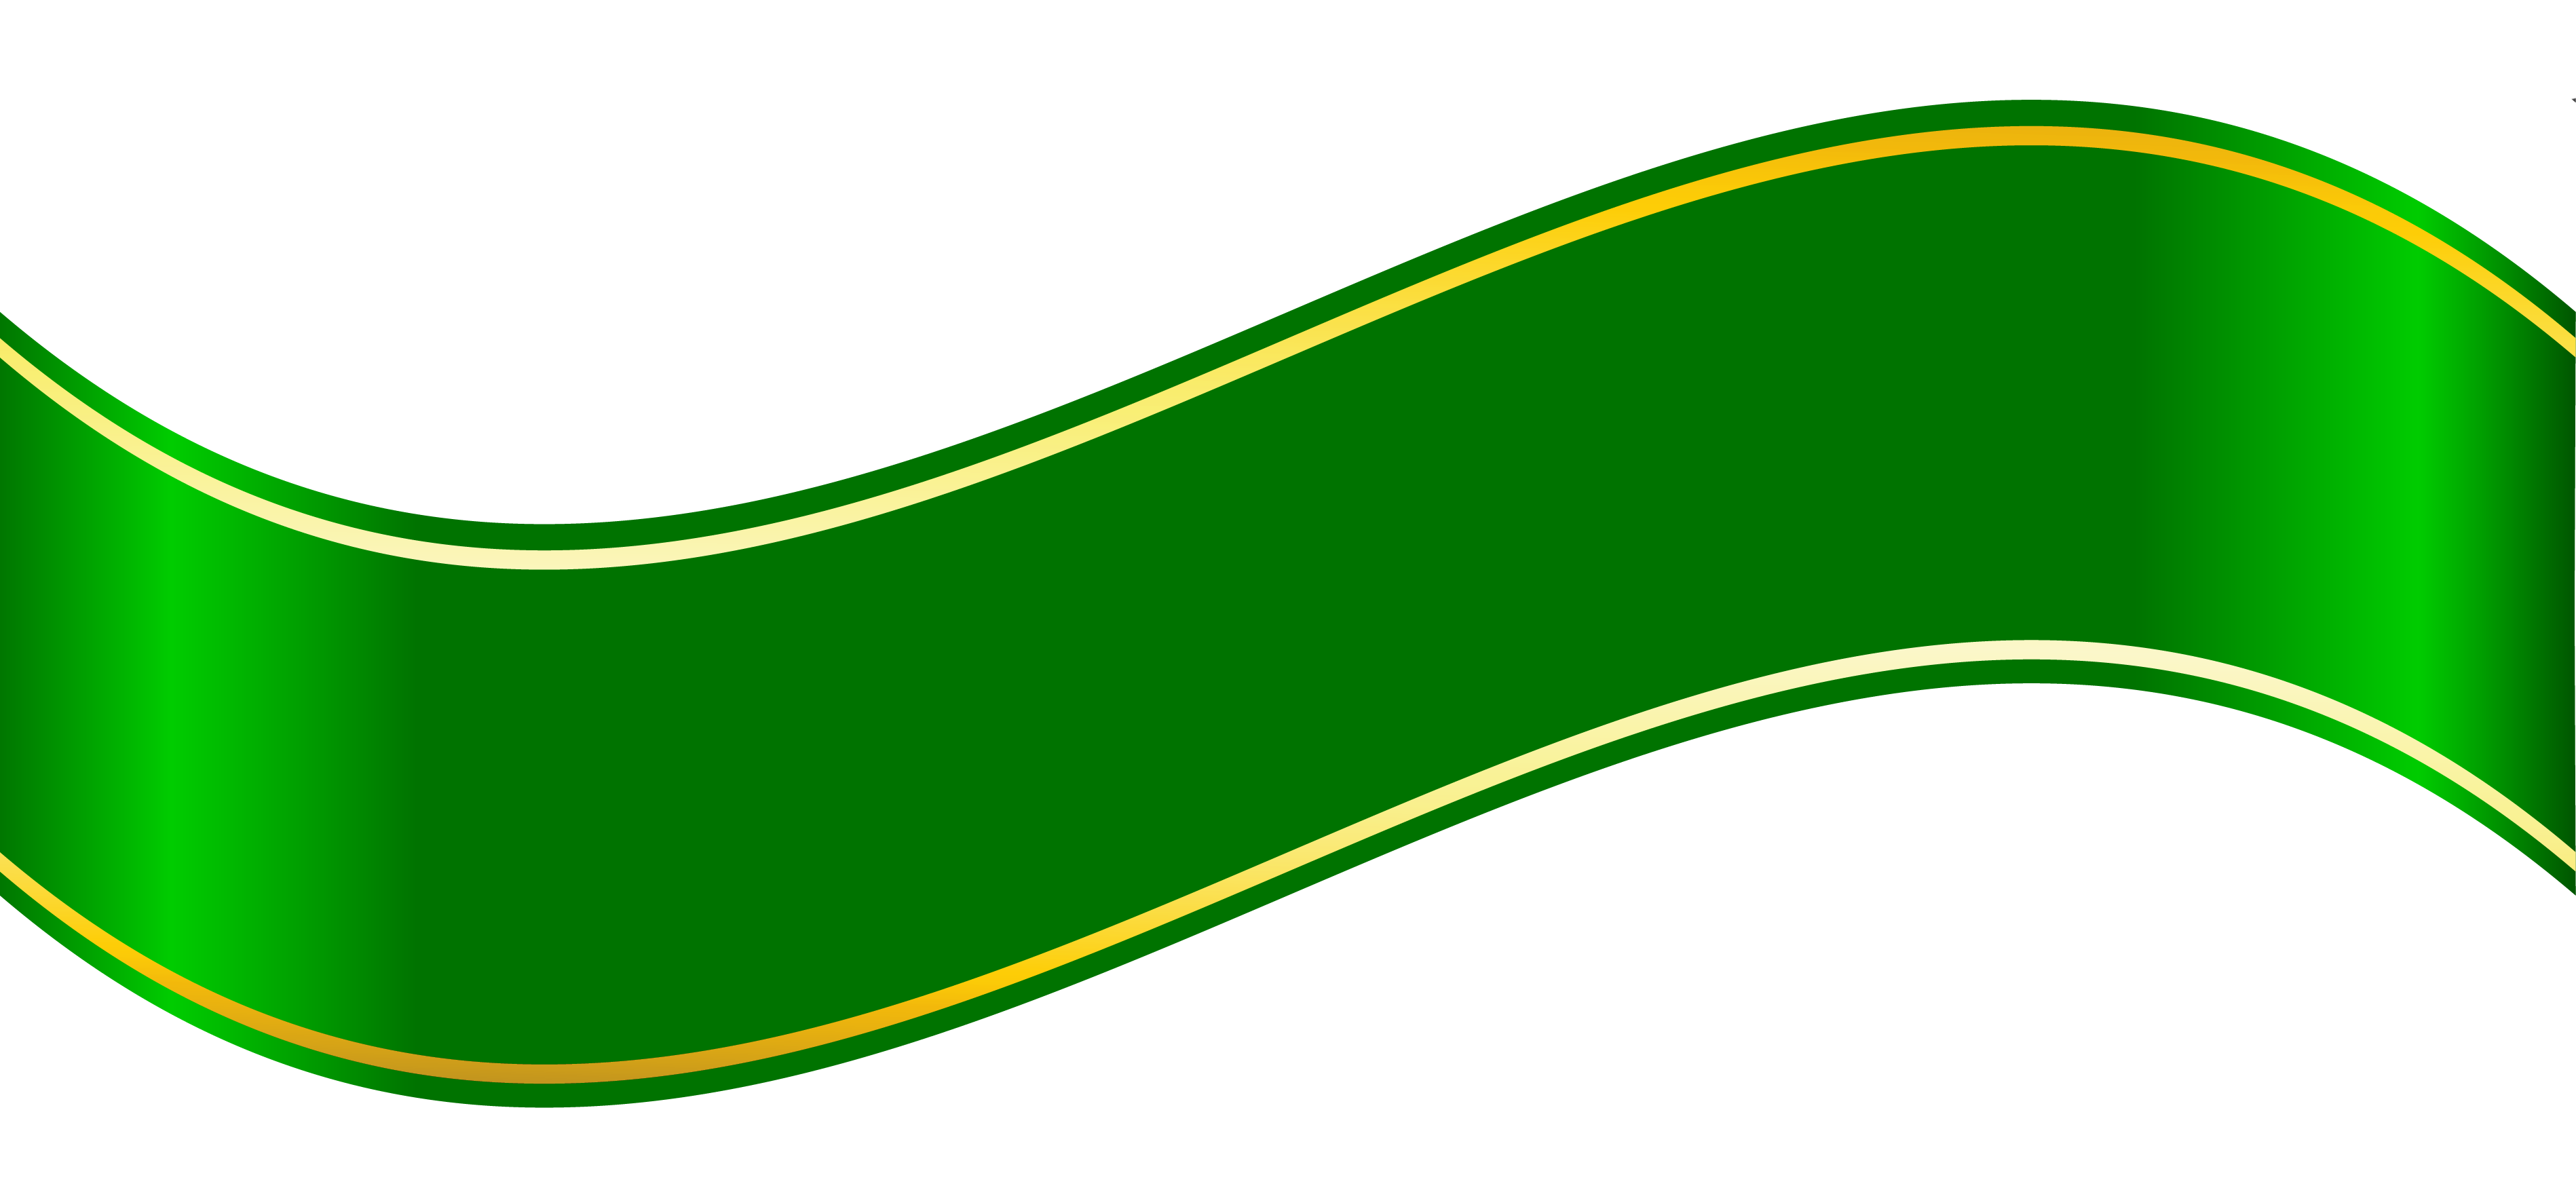 Green Ribbon Download Transparent PNG Image